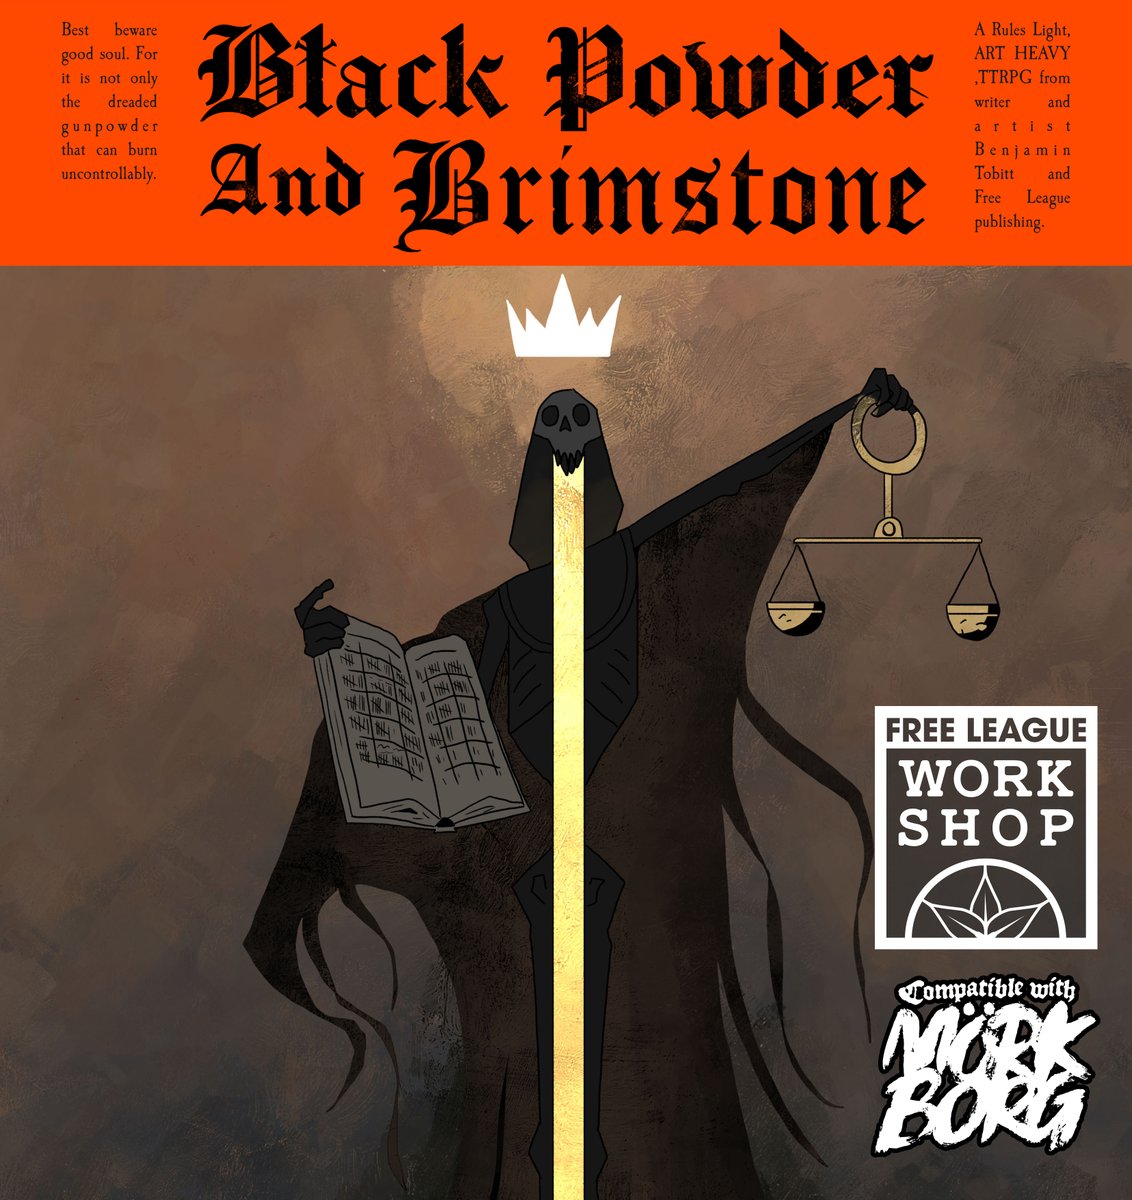 Back the Black Powder and Brimstone campaign today!